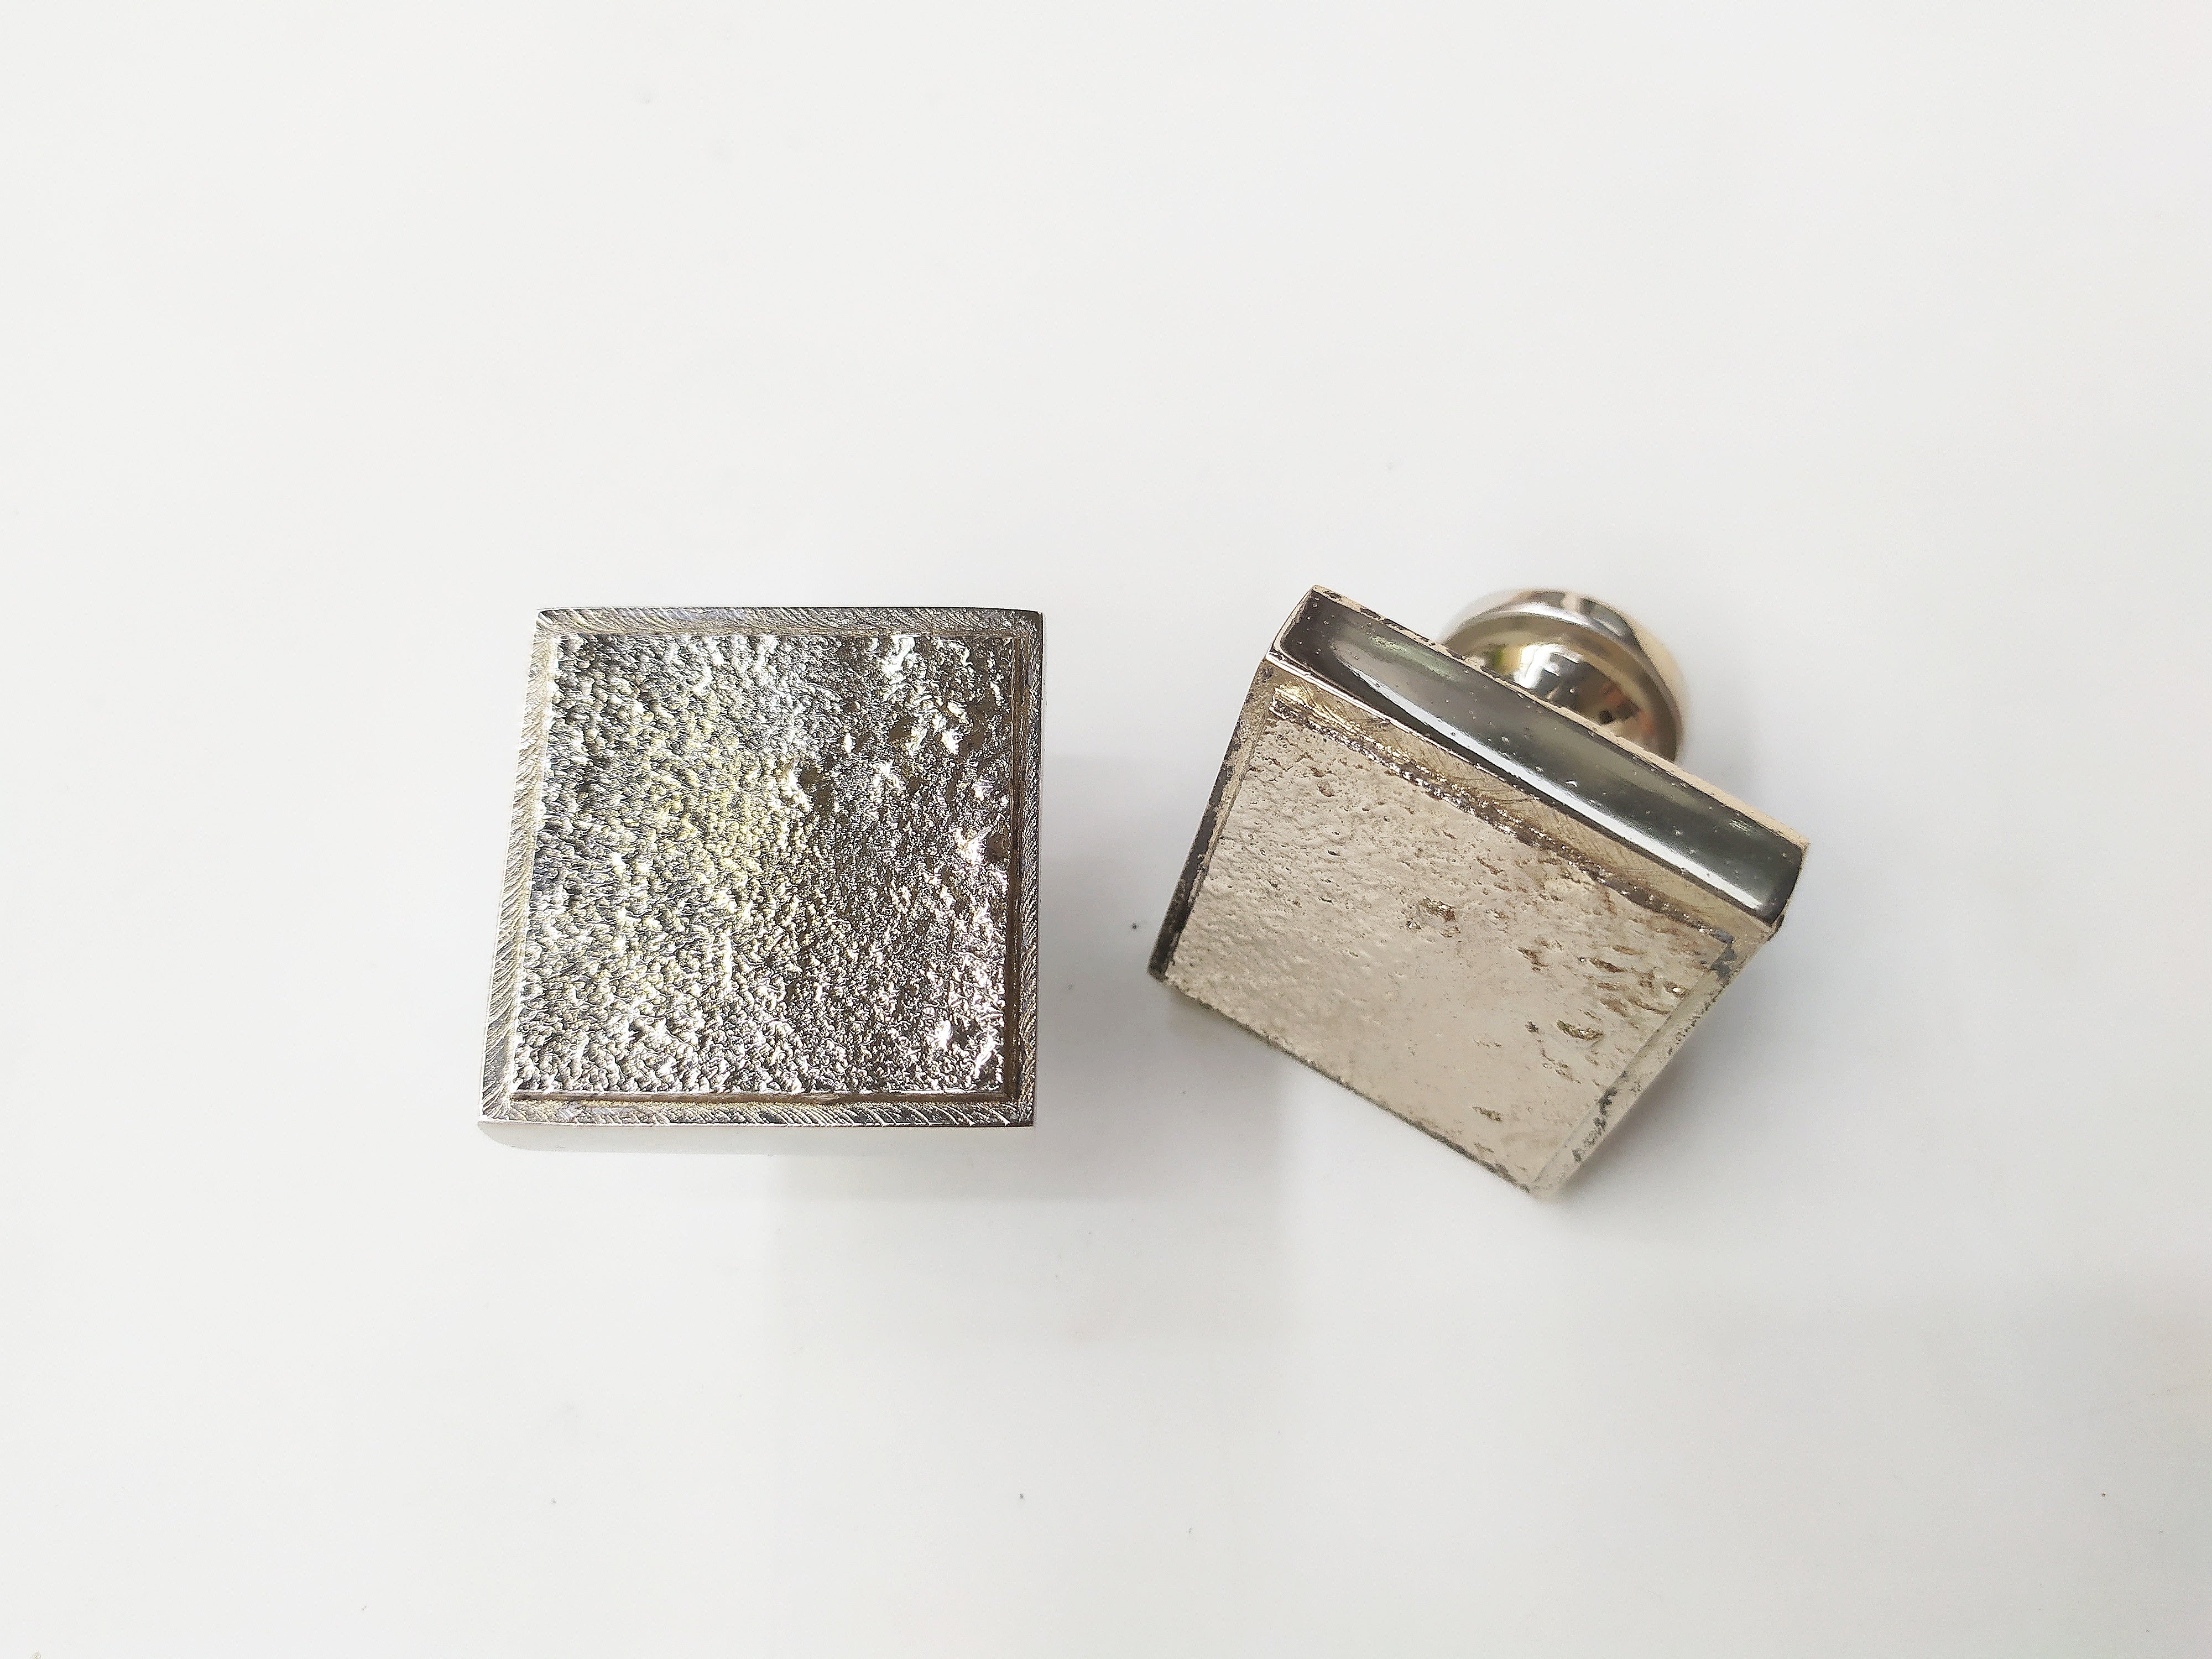 Stringray metal casted knob in nickel plating